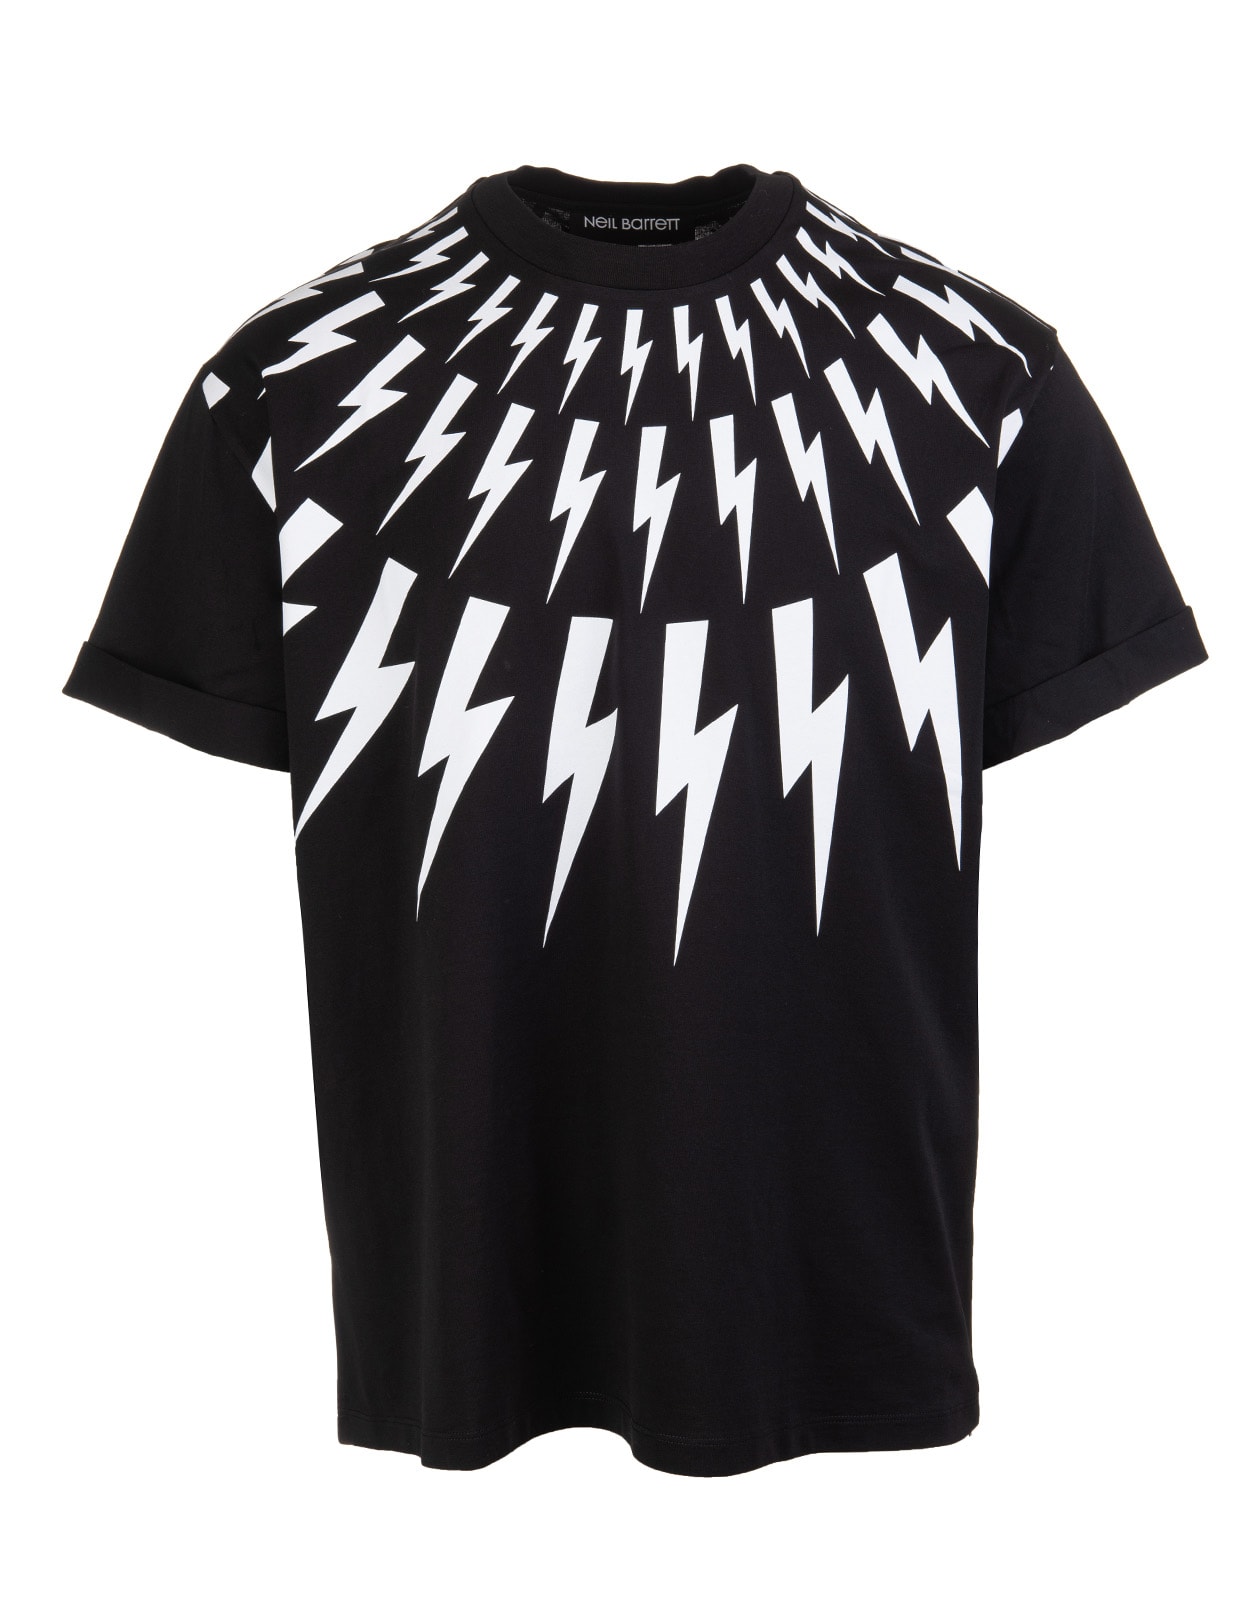 Neil Barrett Man Black T-shirt With Fair Isle Thunderbolt Print